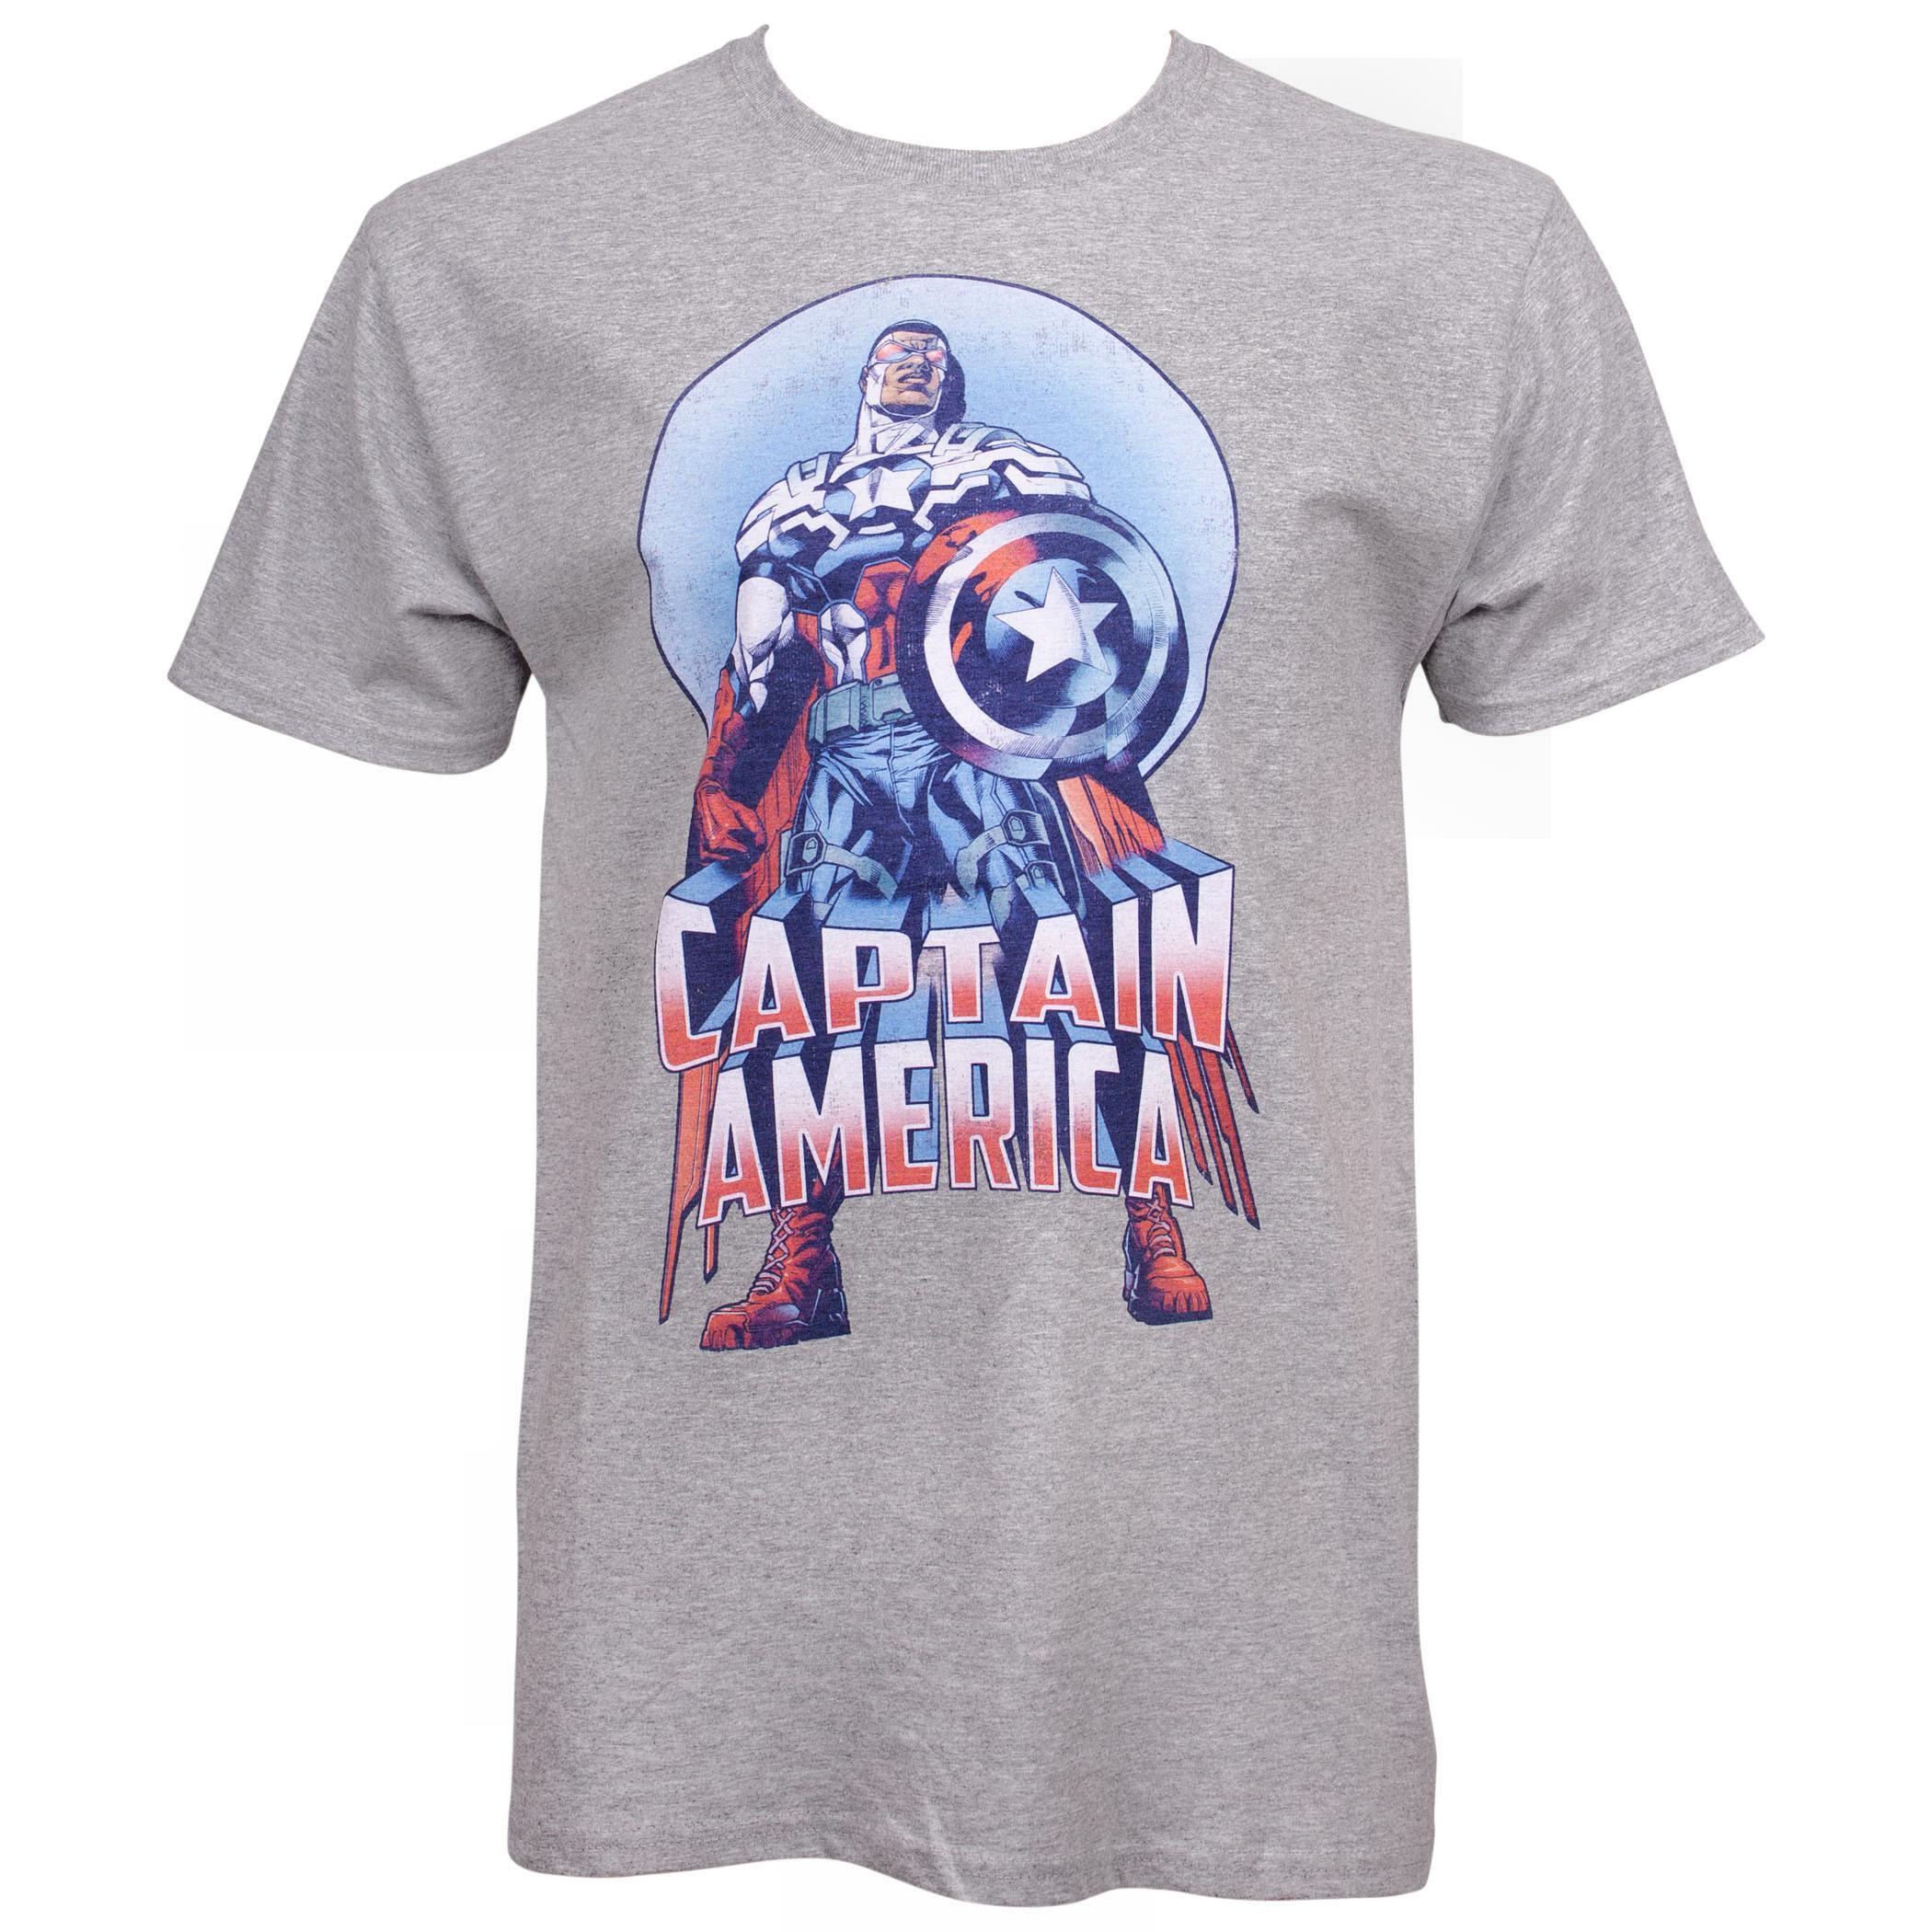 Captain America Falcon T-Shirt Medium